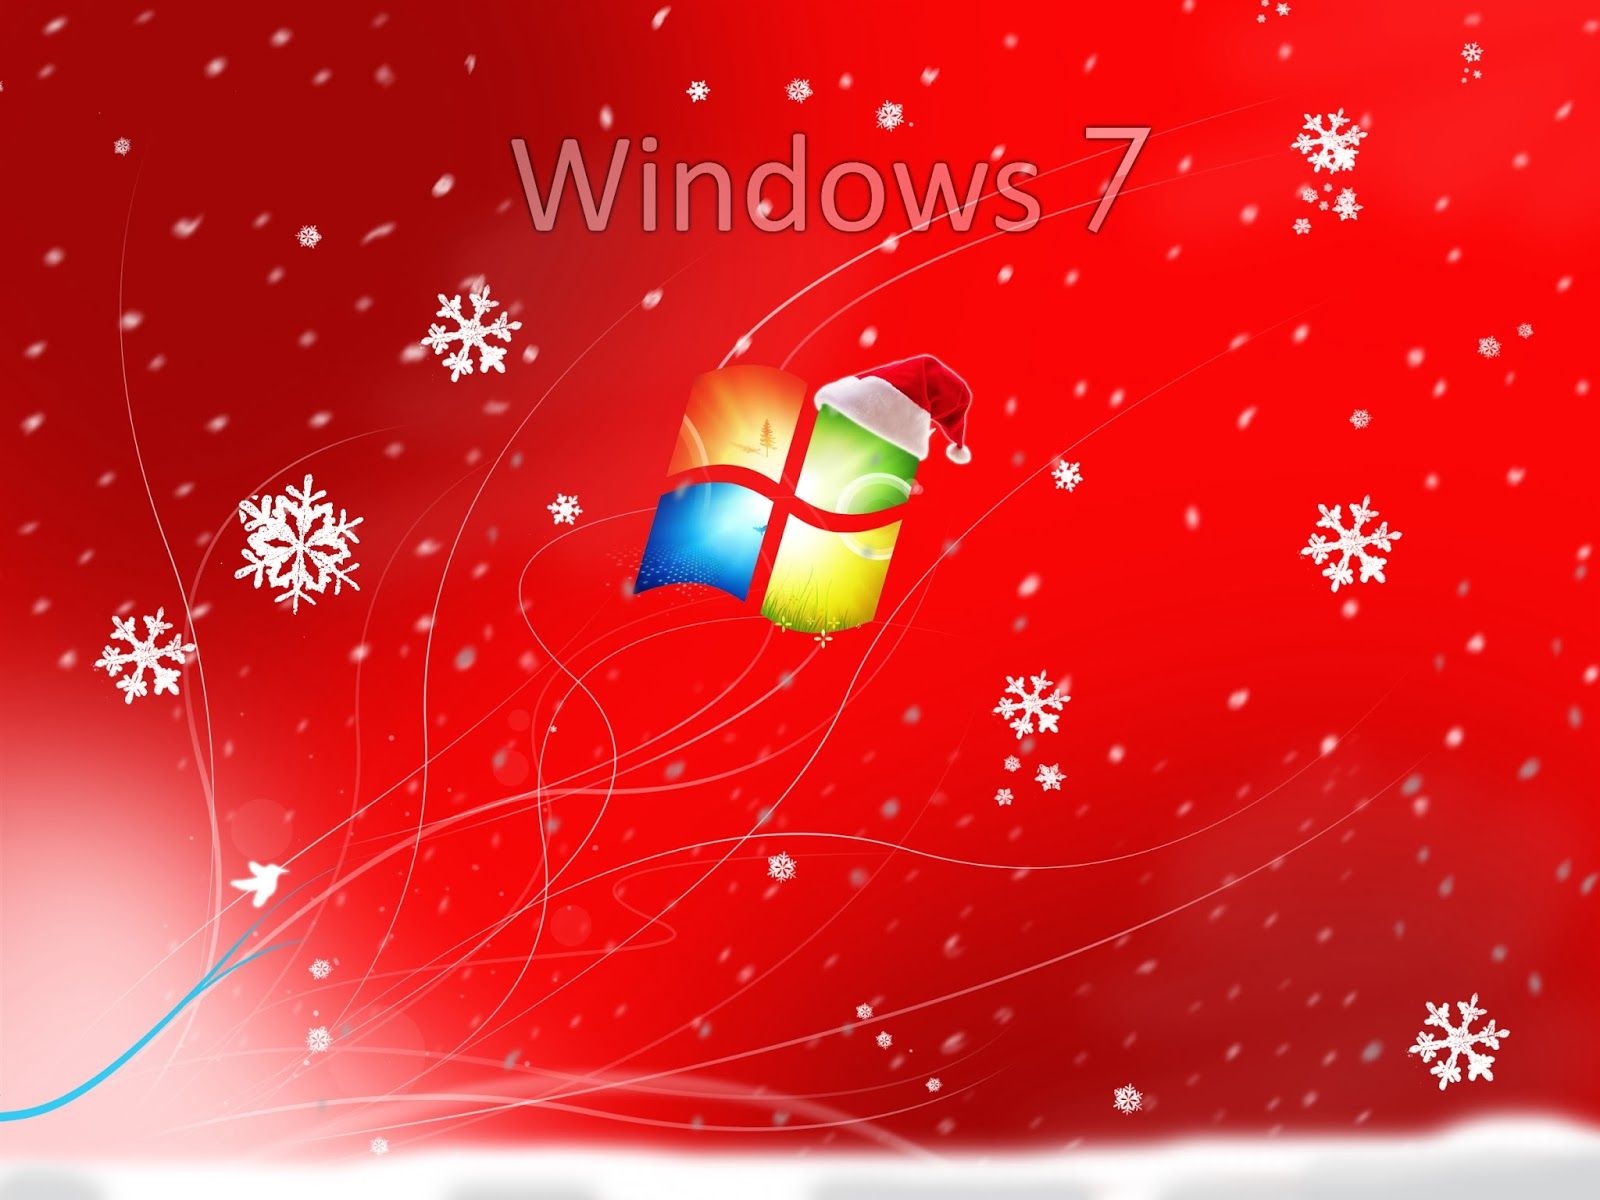 HD wallpaper: Windows 7 Wallpaper Red. Animated christmas wallpaper, Christmas wallpaper, Christmas screen savers